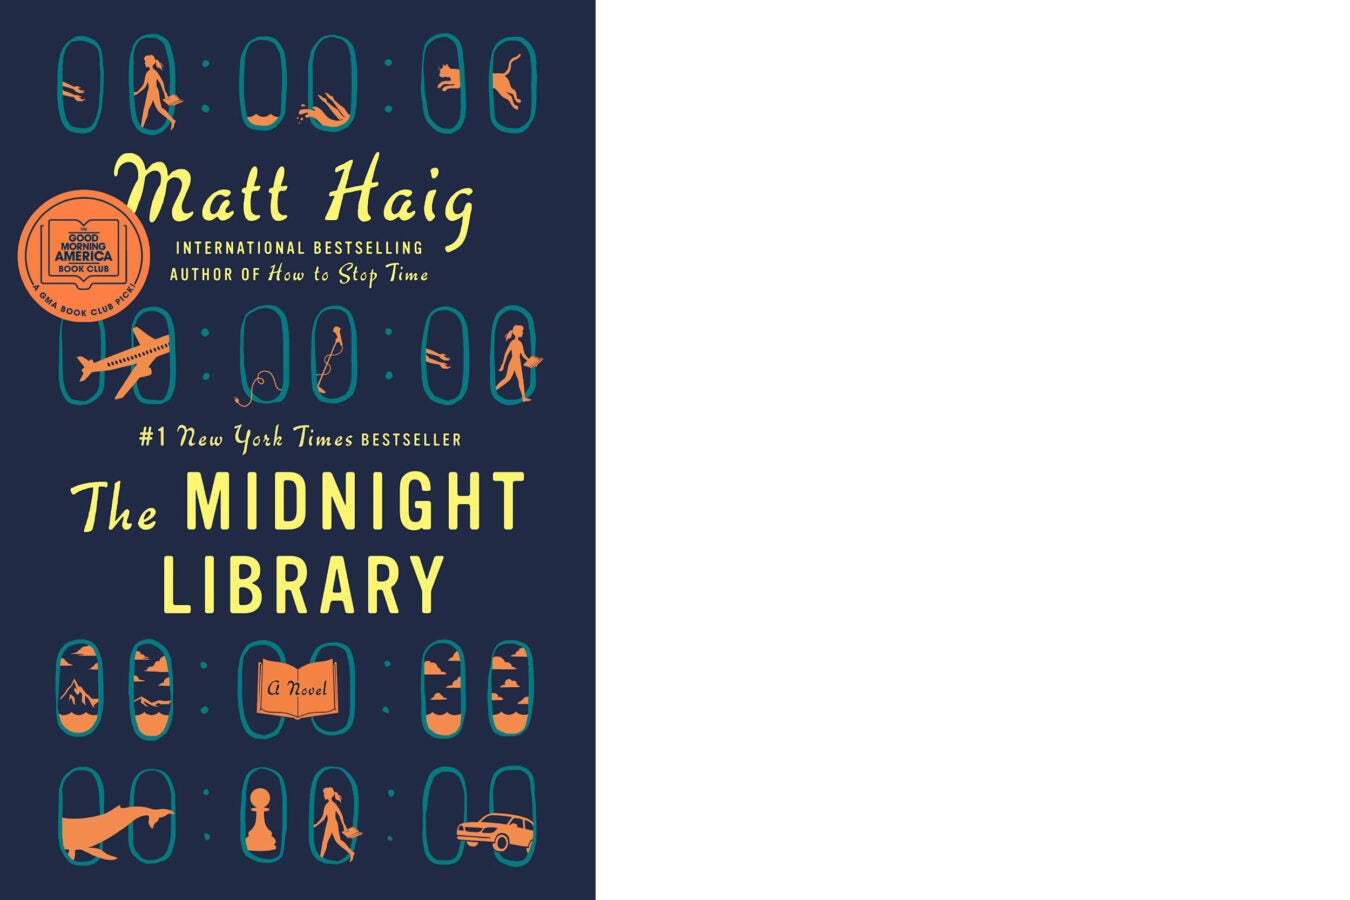 Book cover: “The Midnight Library” by Matt Haig.